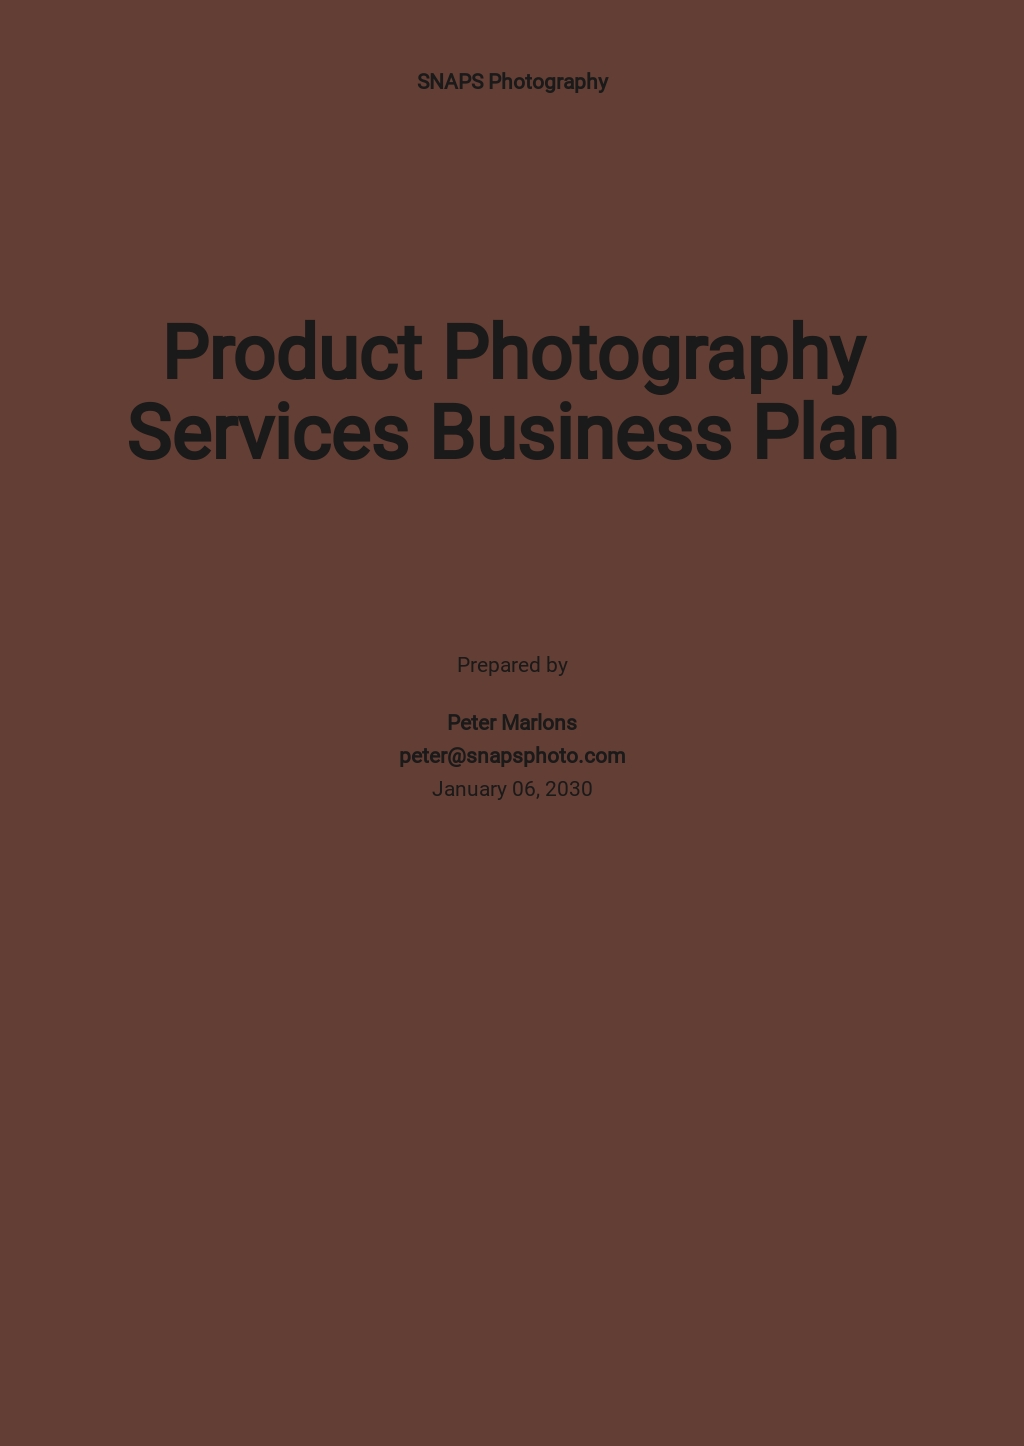 photography company business plan pdf